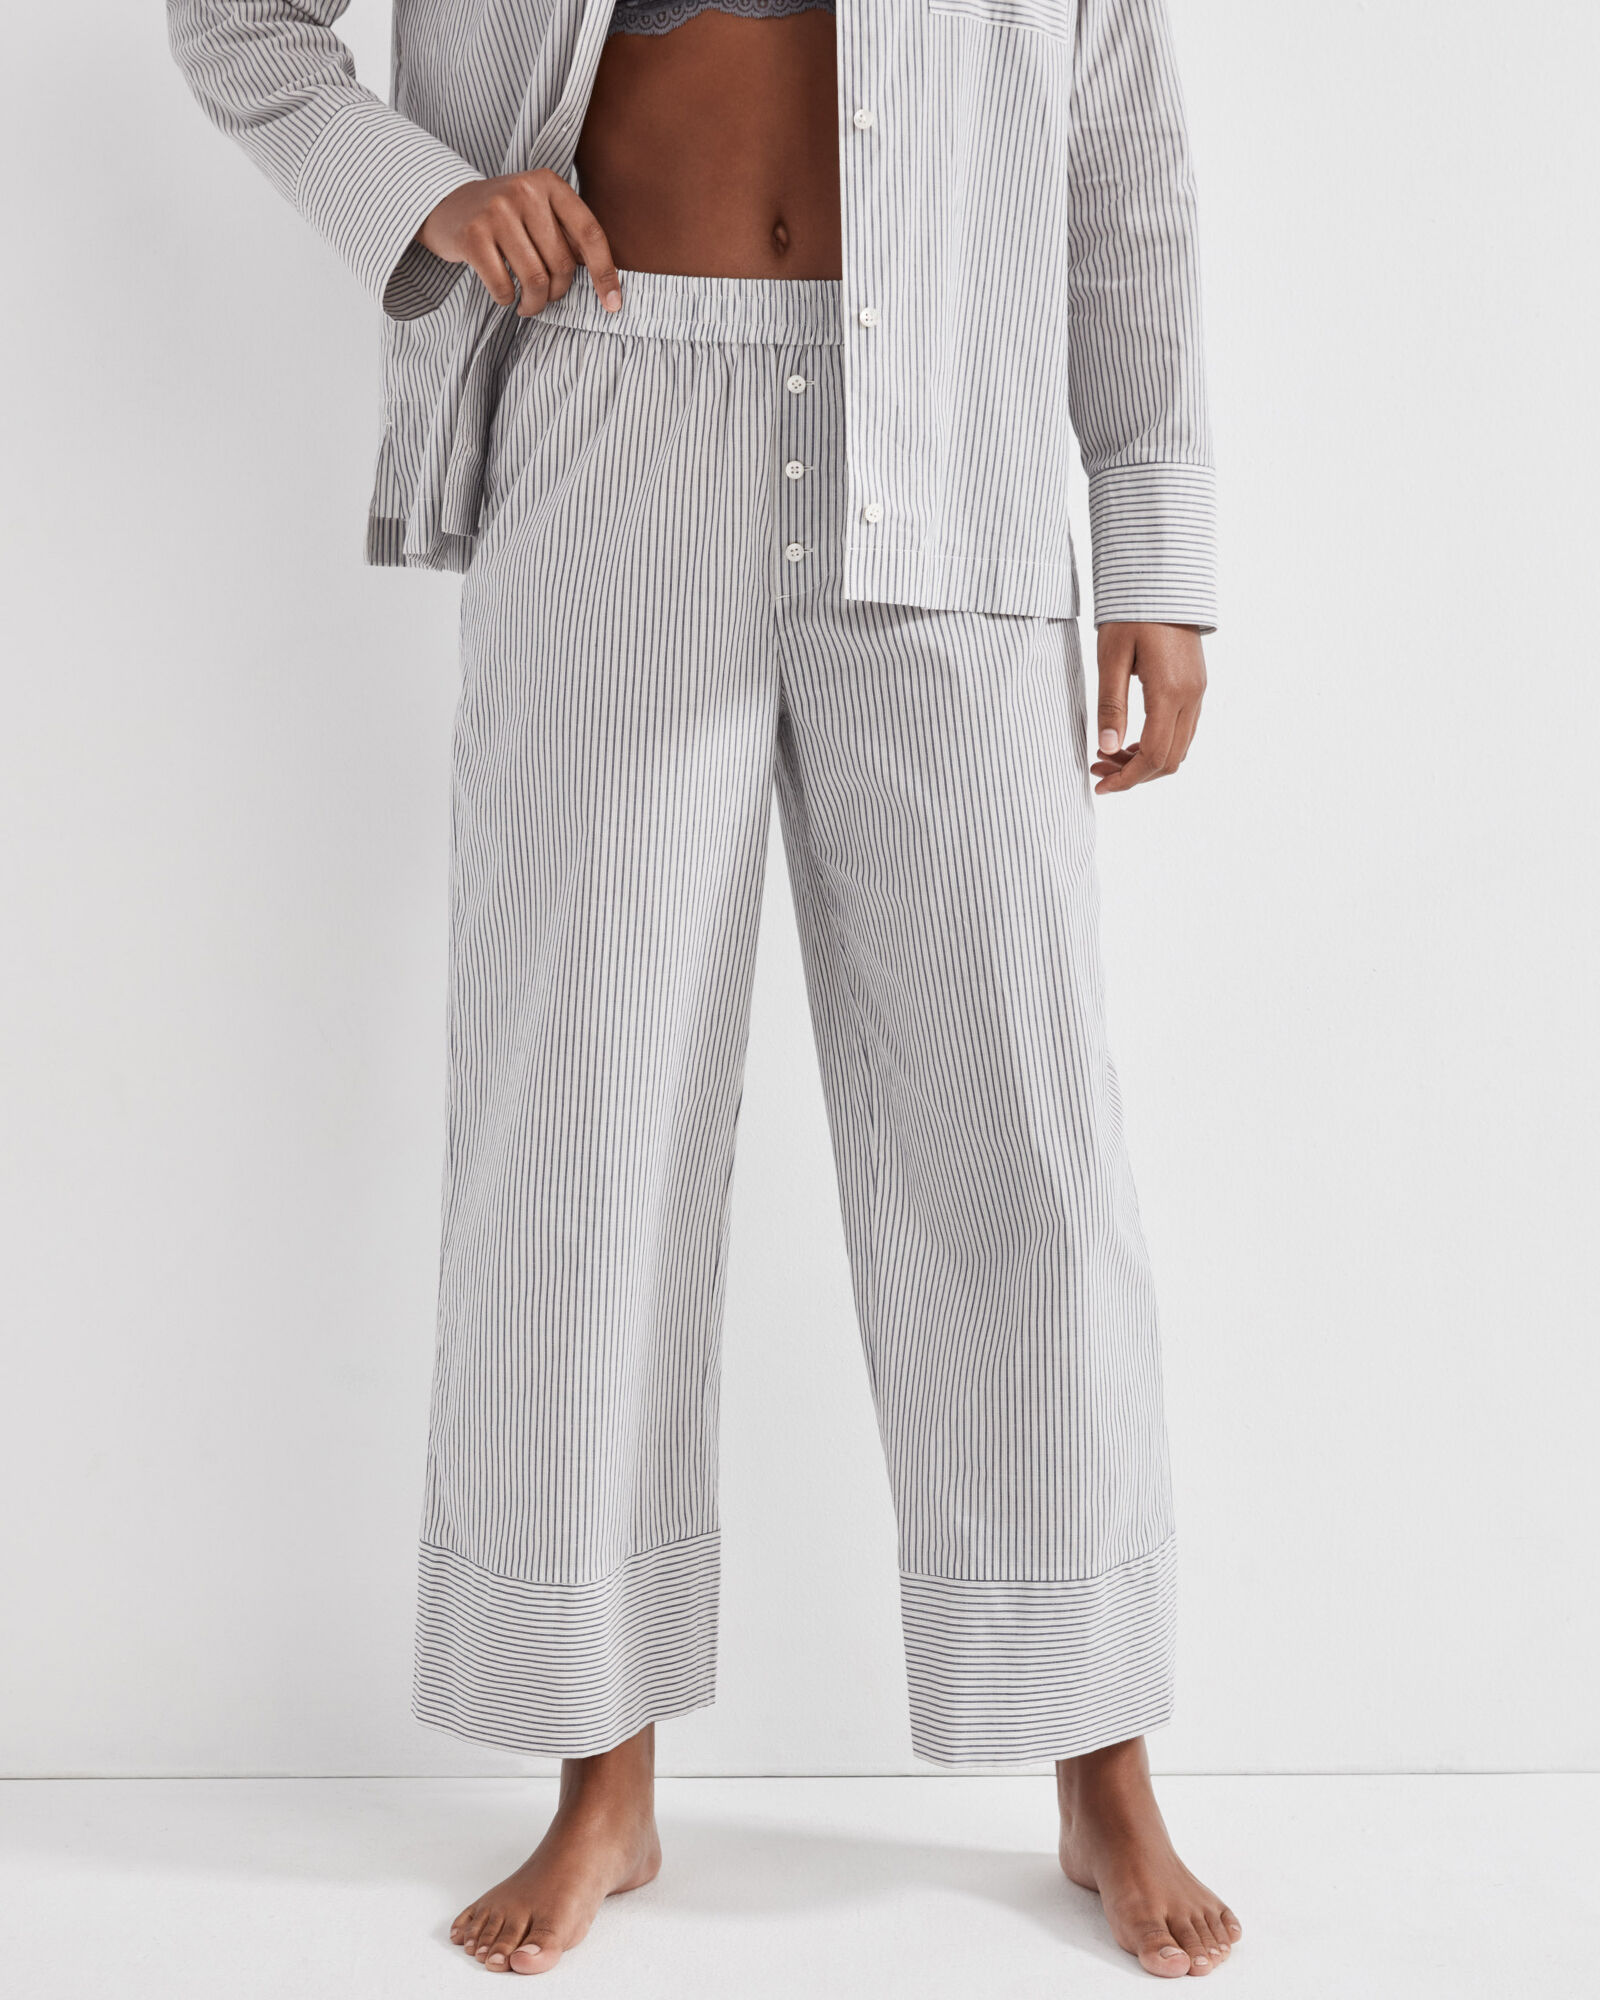 Underpants, White - 100% Organic Cotton Loungewear